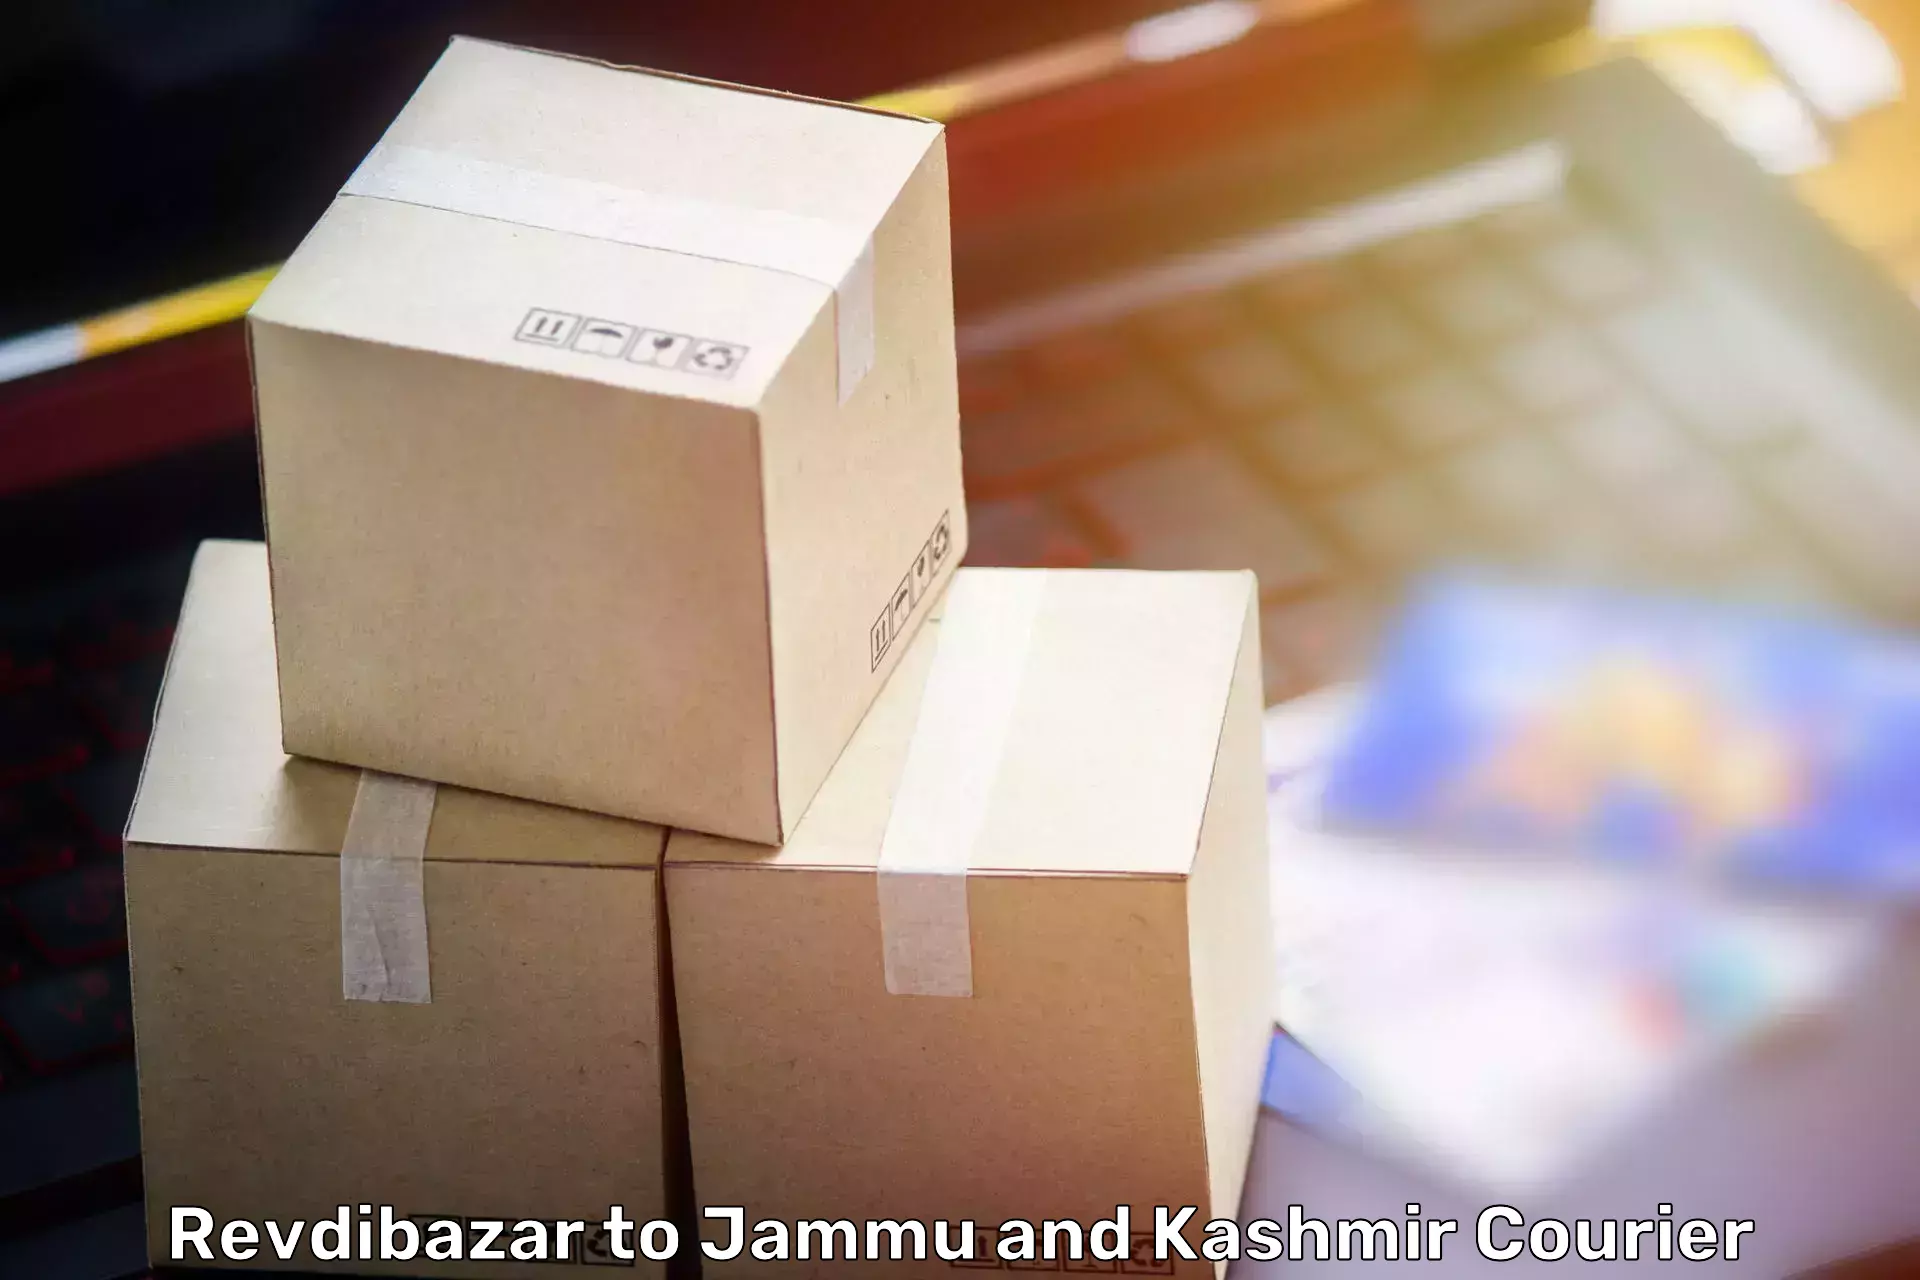 Trusted moving company in Revdibazar to Srinagar Kashmir